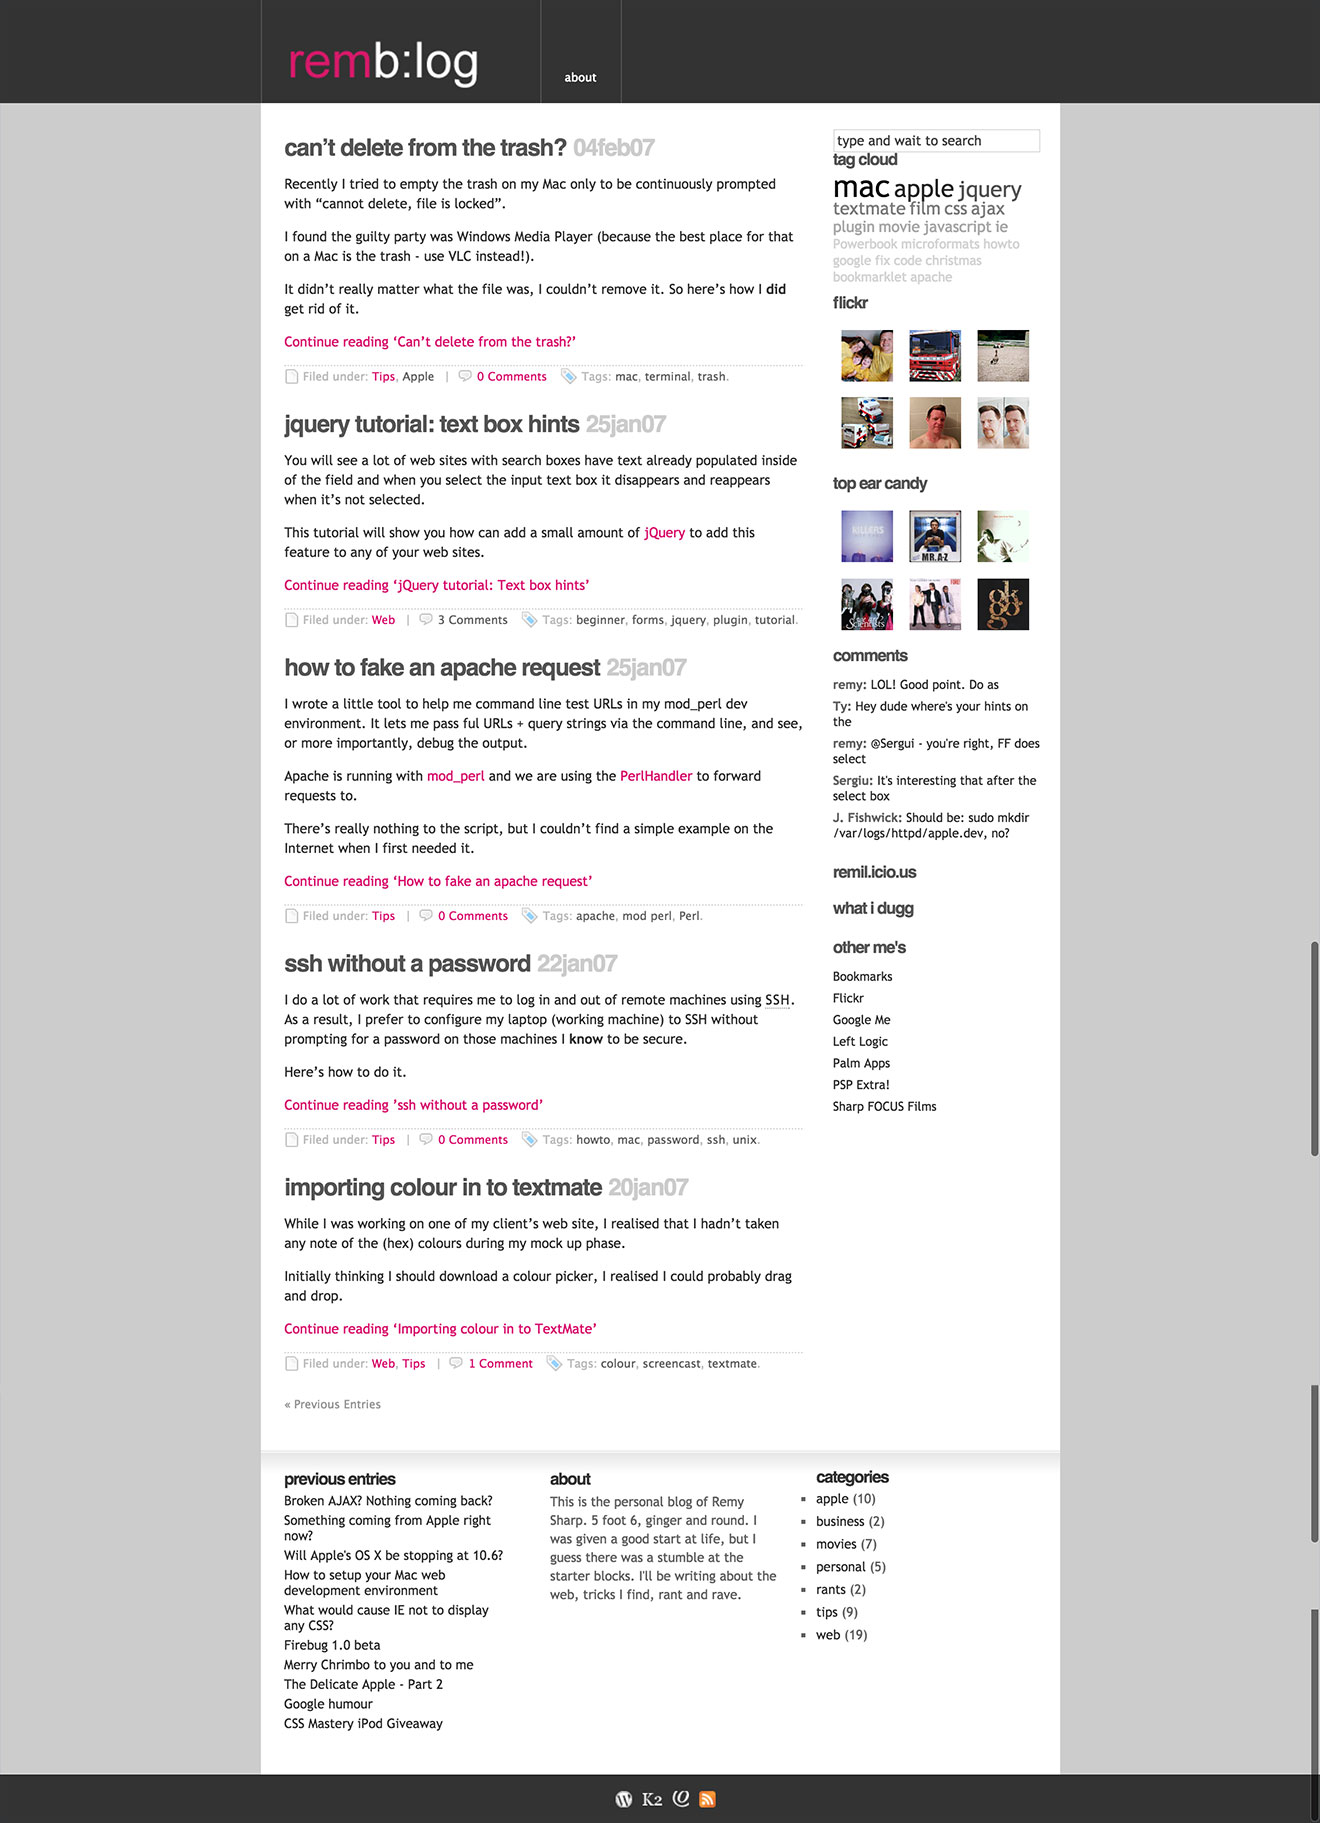 Screenshot of my blog from 2006